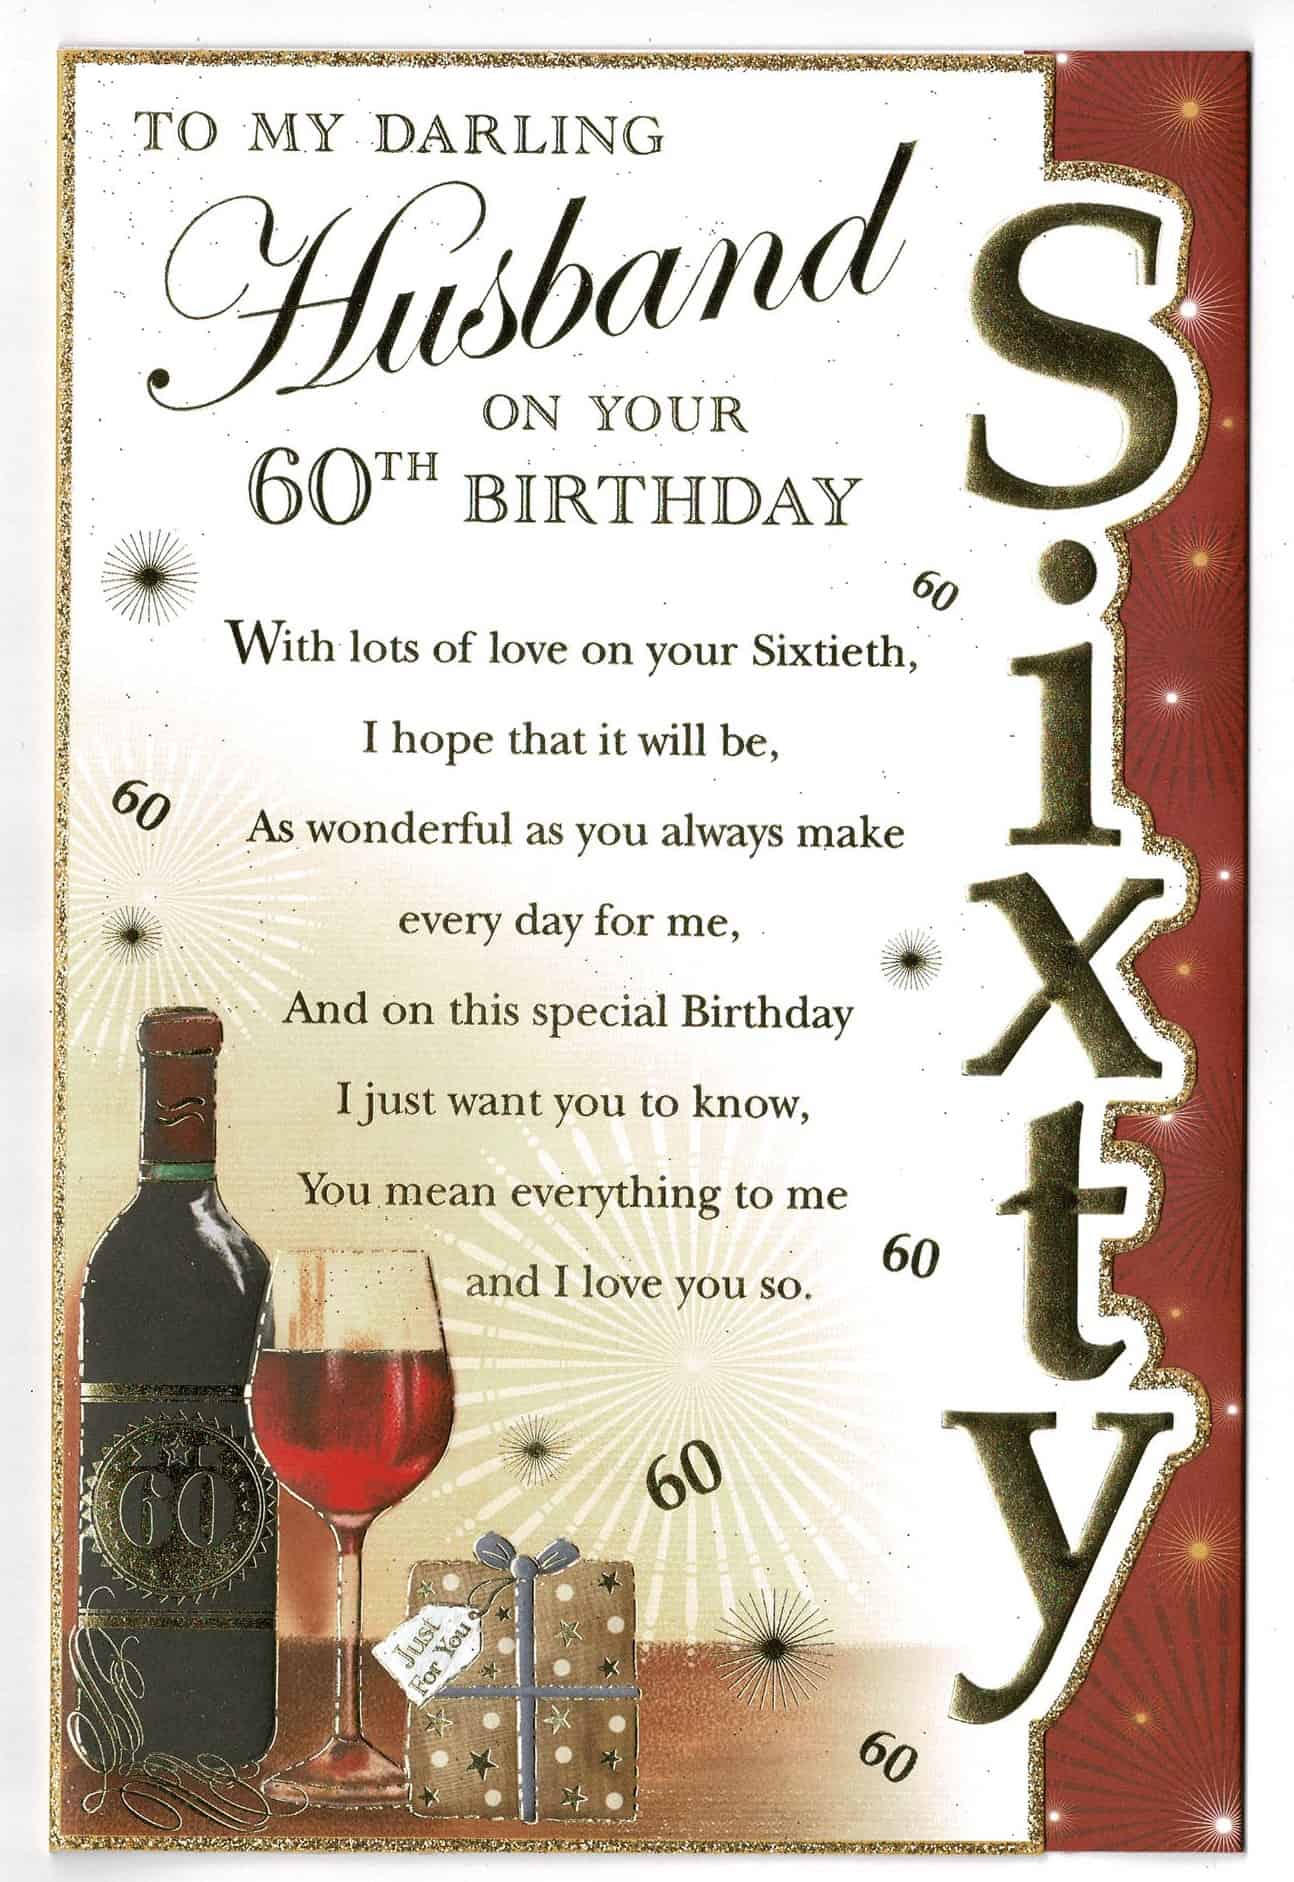 husband-birthday-card-to-my-darling-husband-on-your-60th-birthday-tri